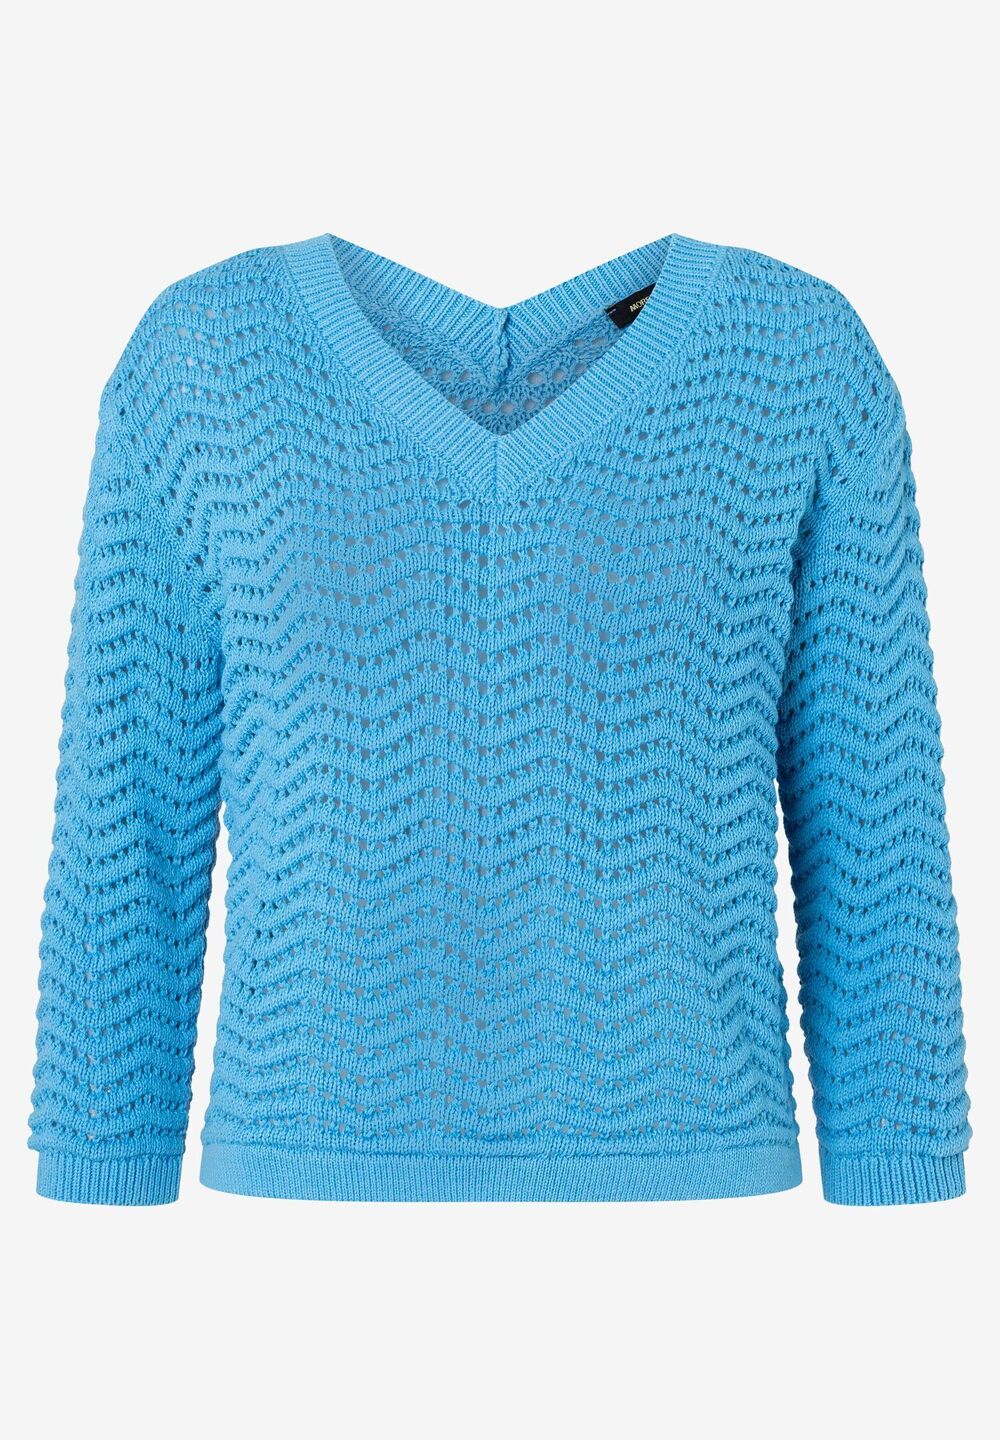 Ajour-Pullover, happy blue, Sommer-Kollektion, blauDetailansicht 1